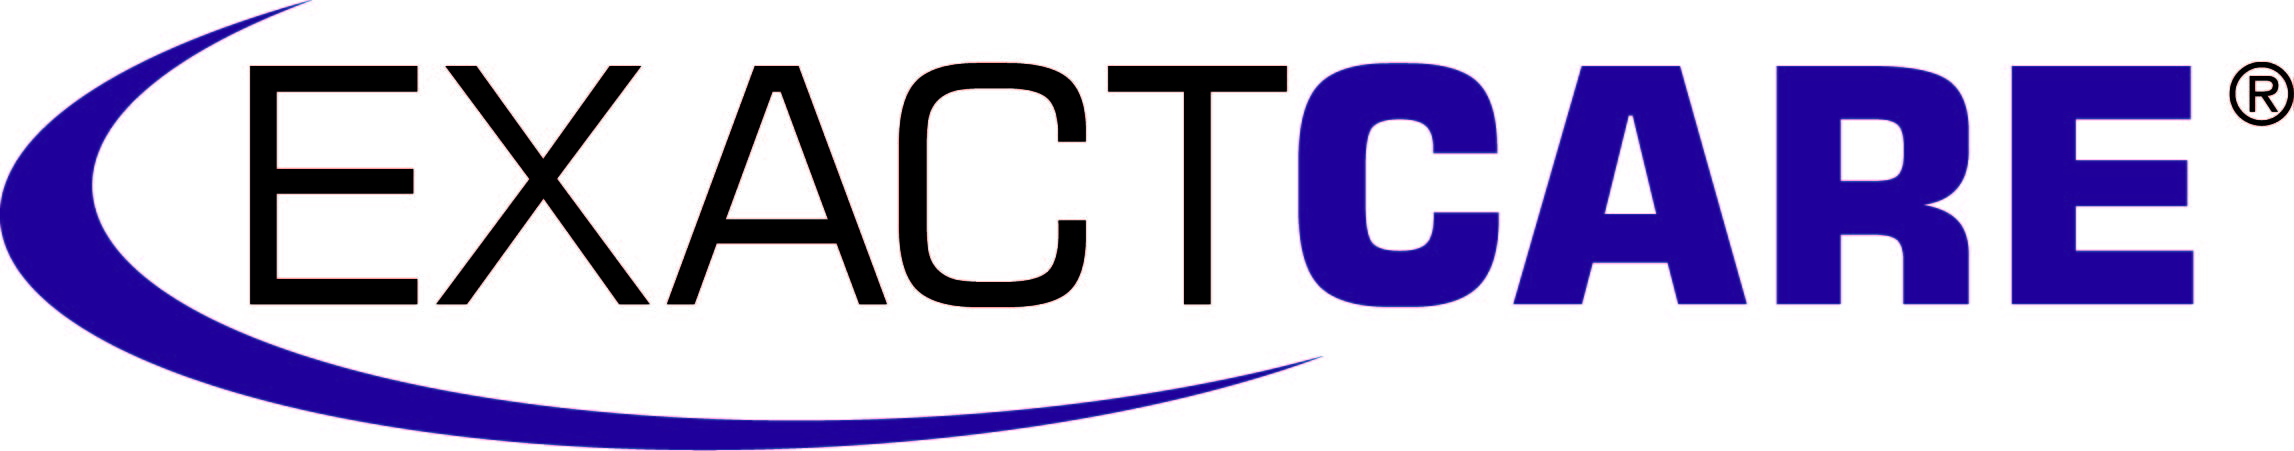 ExactCare Logo_NO PH (1).jpg